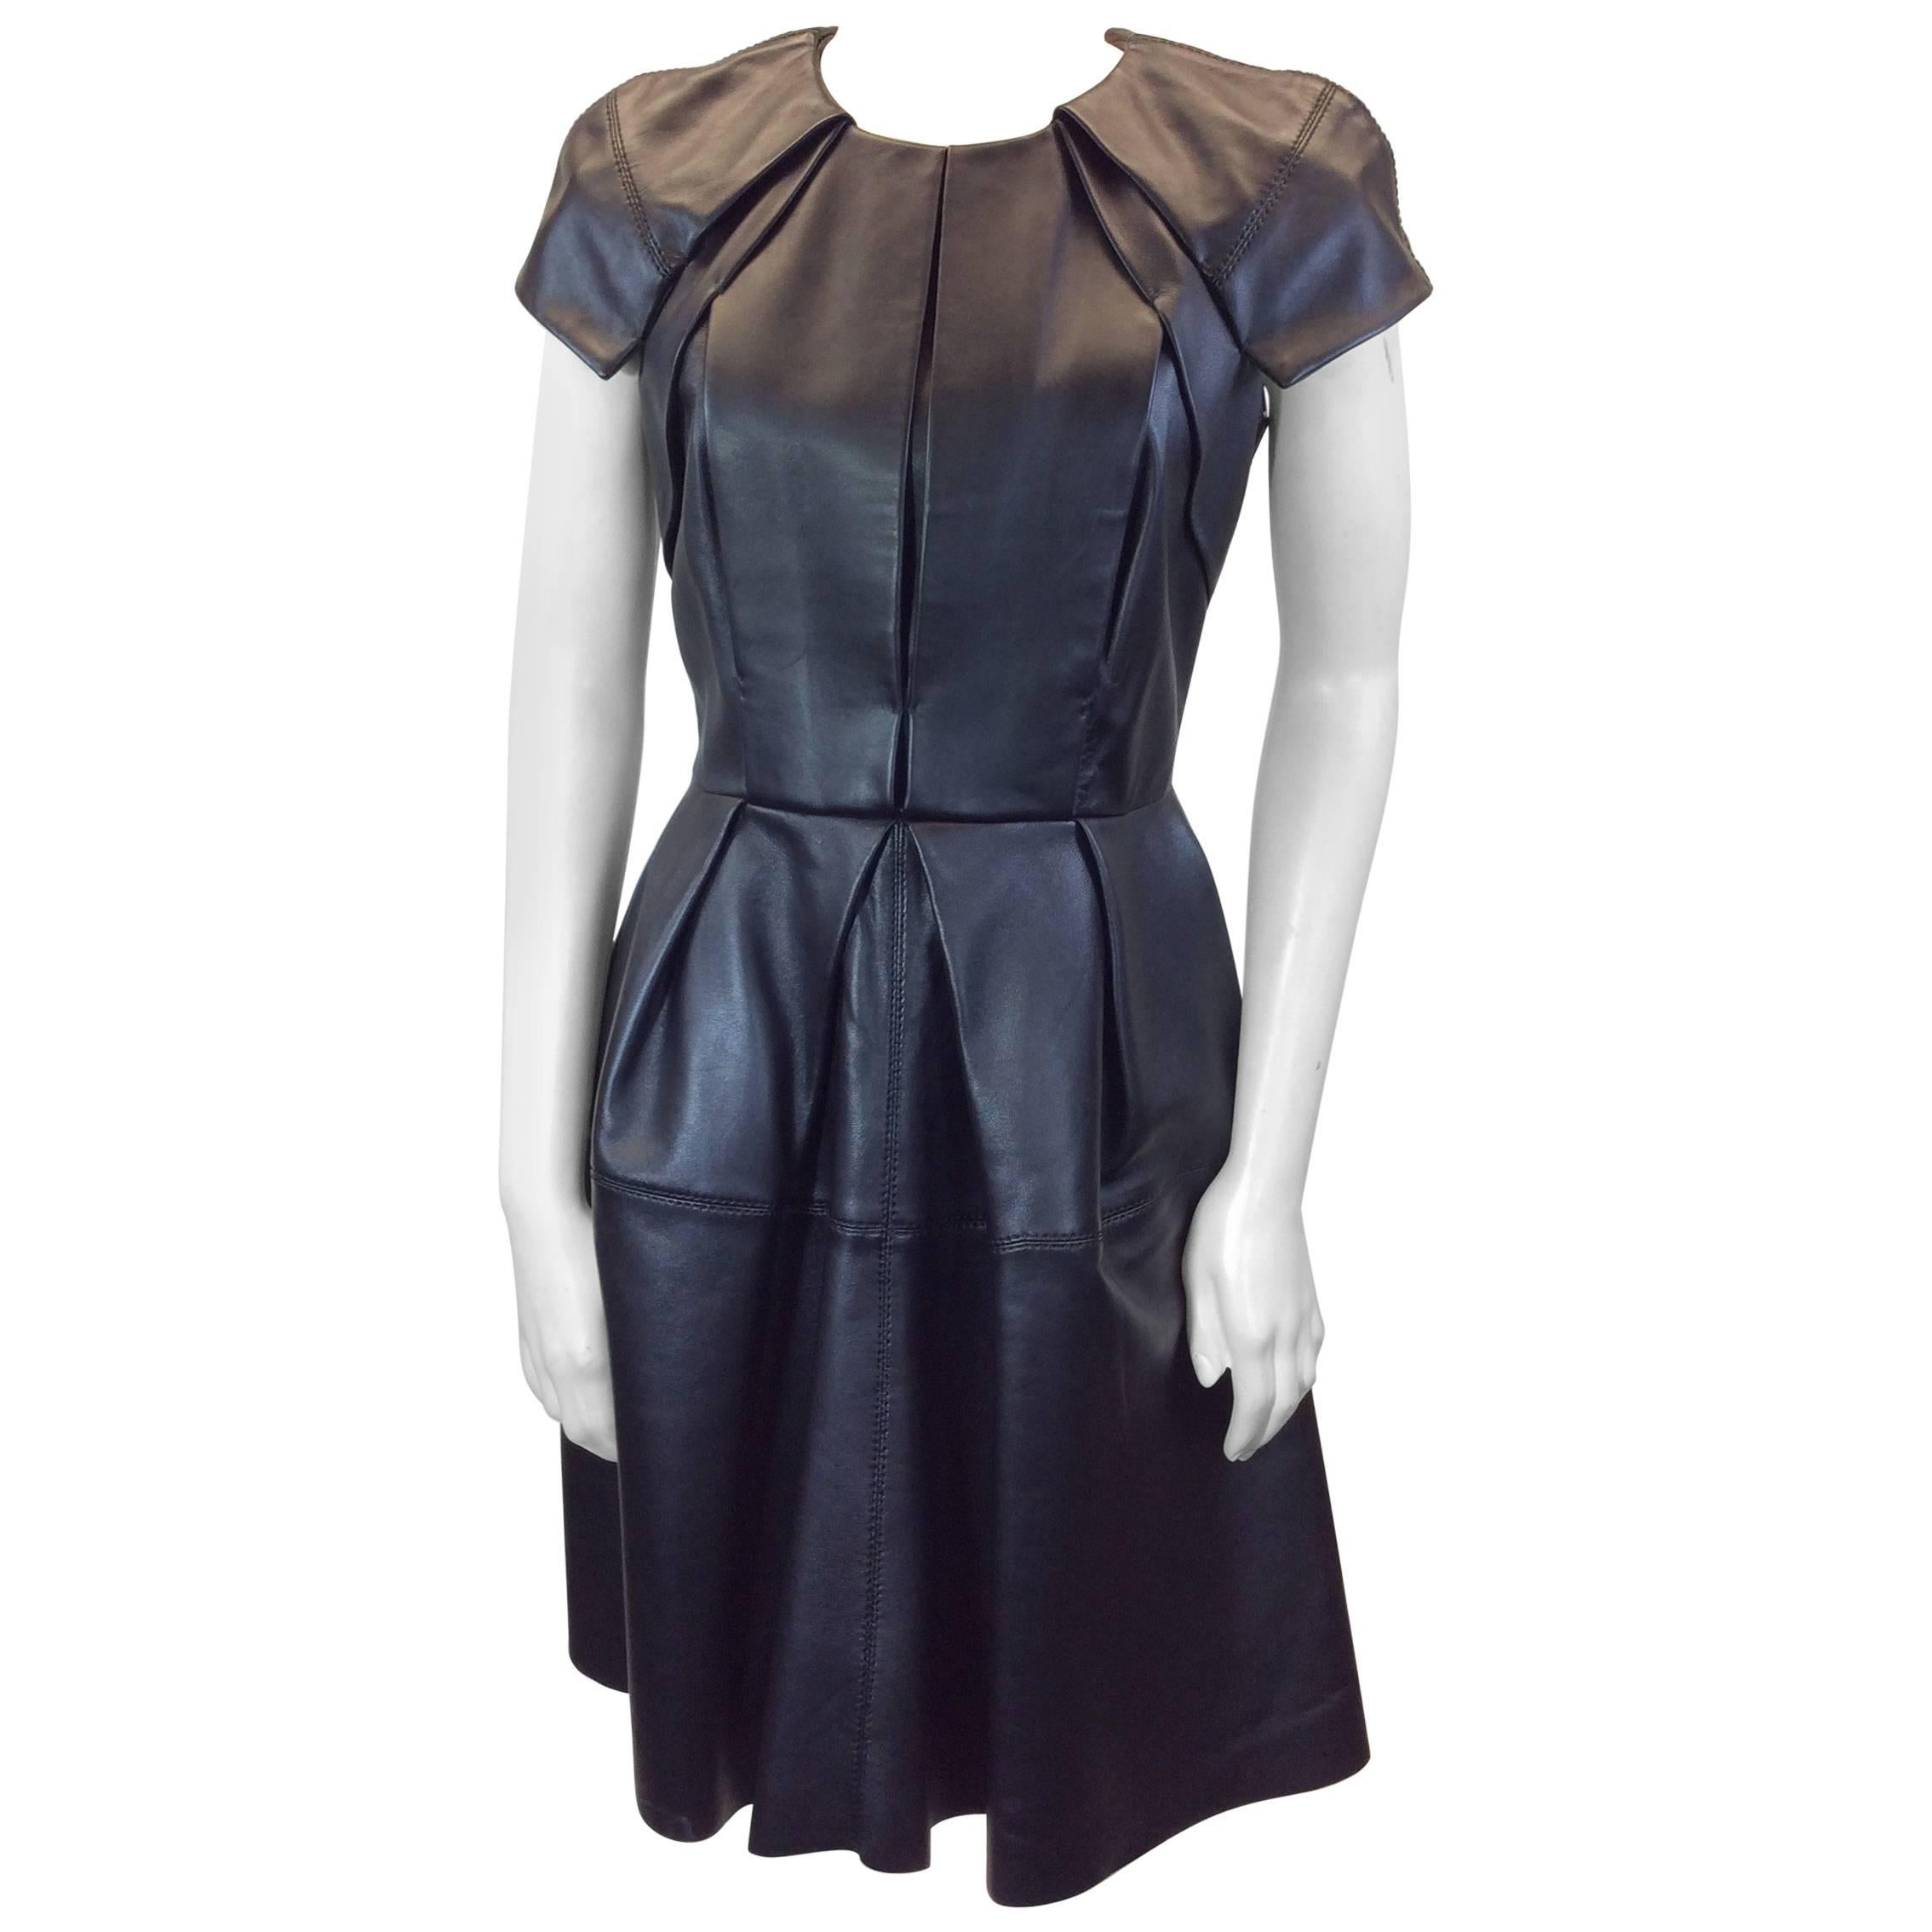 Dice Kayek Black Leather  Structured Dress  For Sale